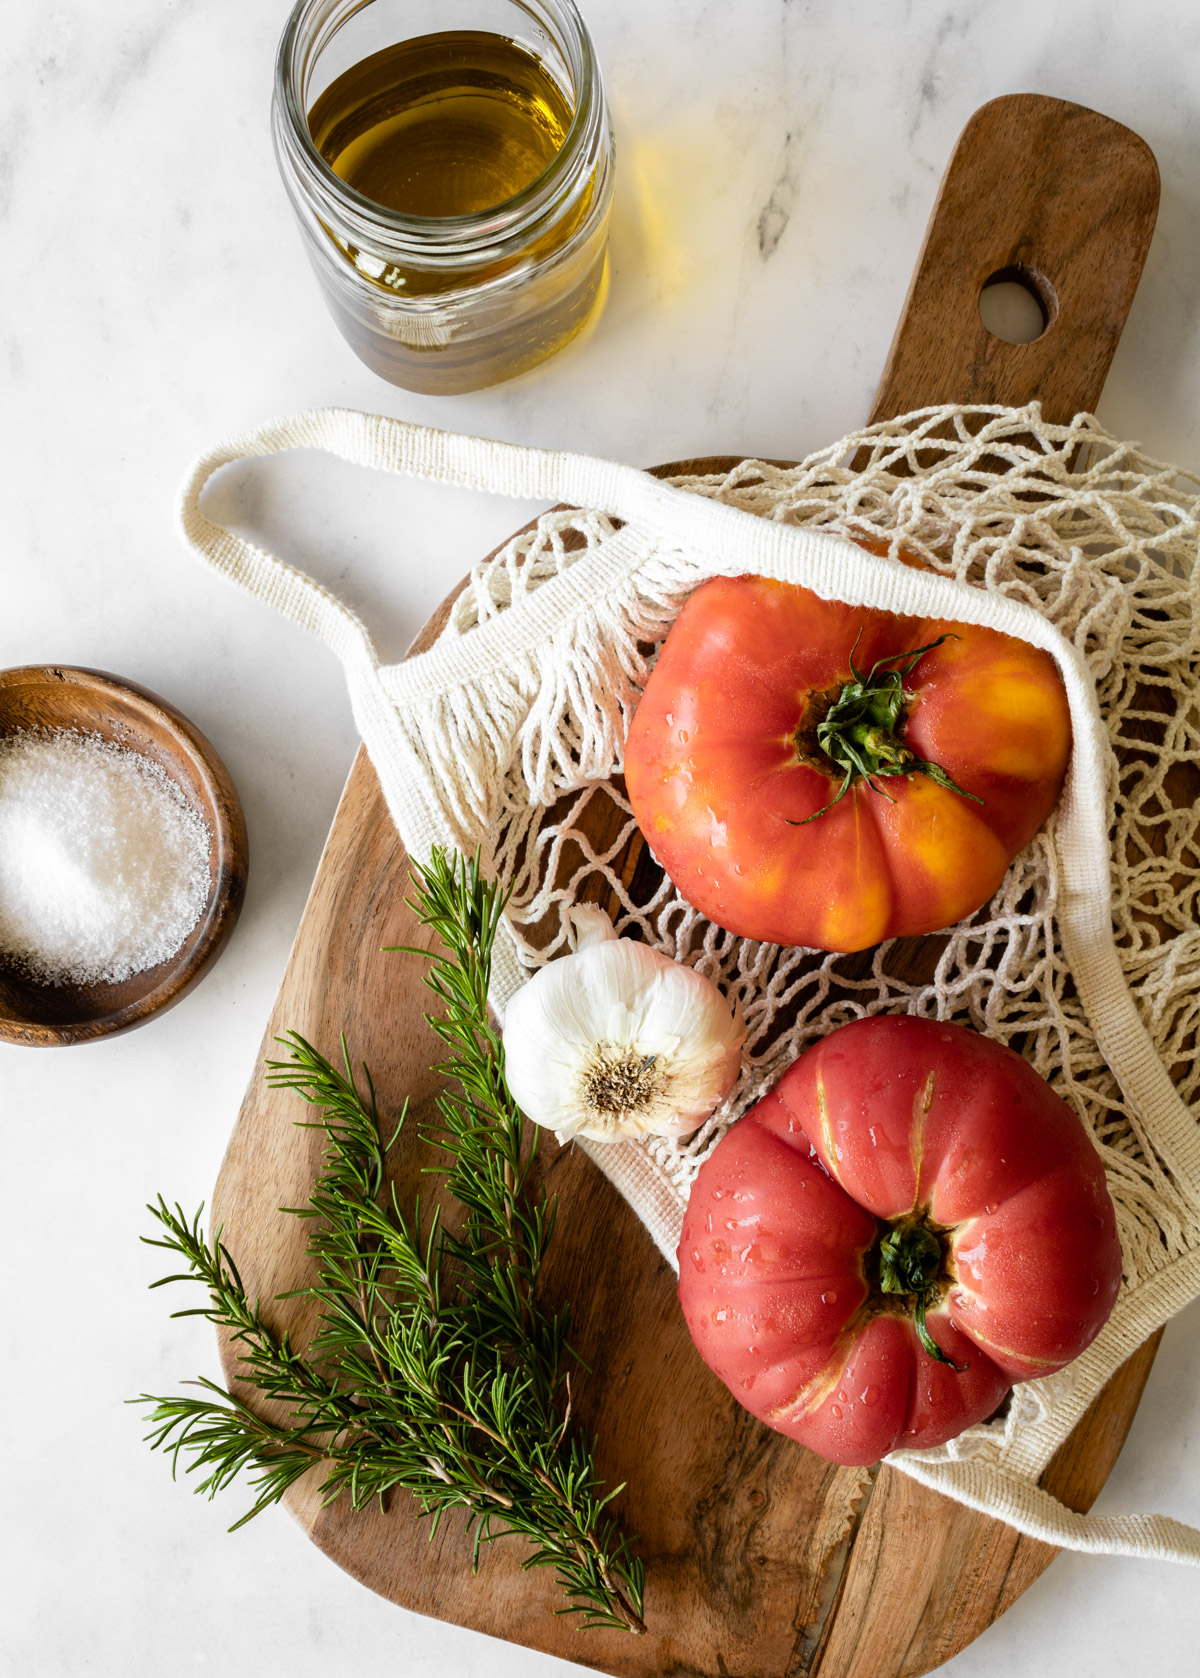 ingredients to make smoked tomato confit.